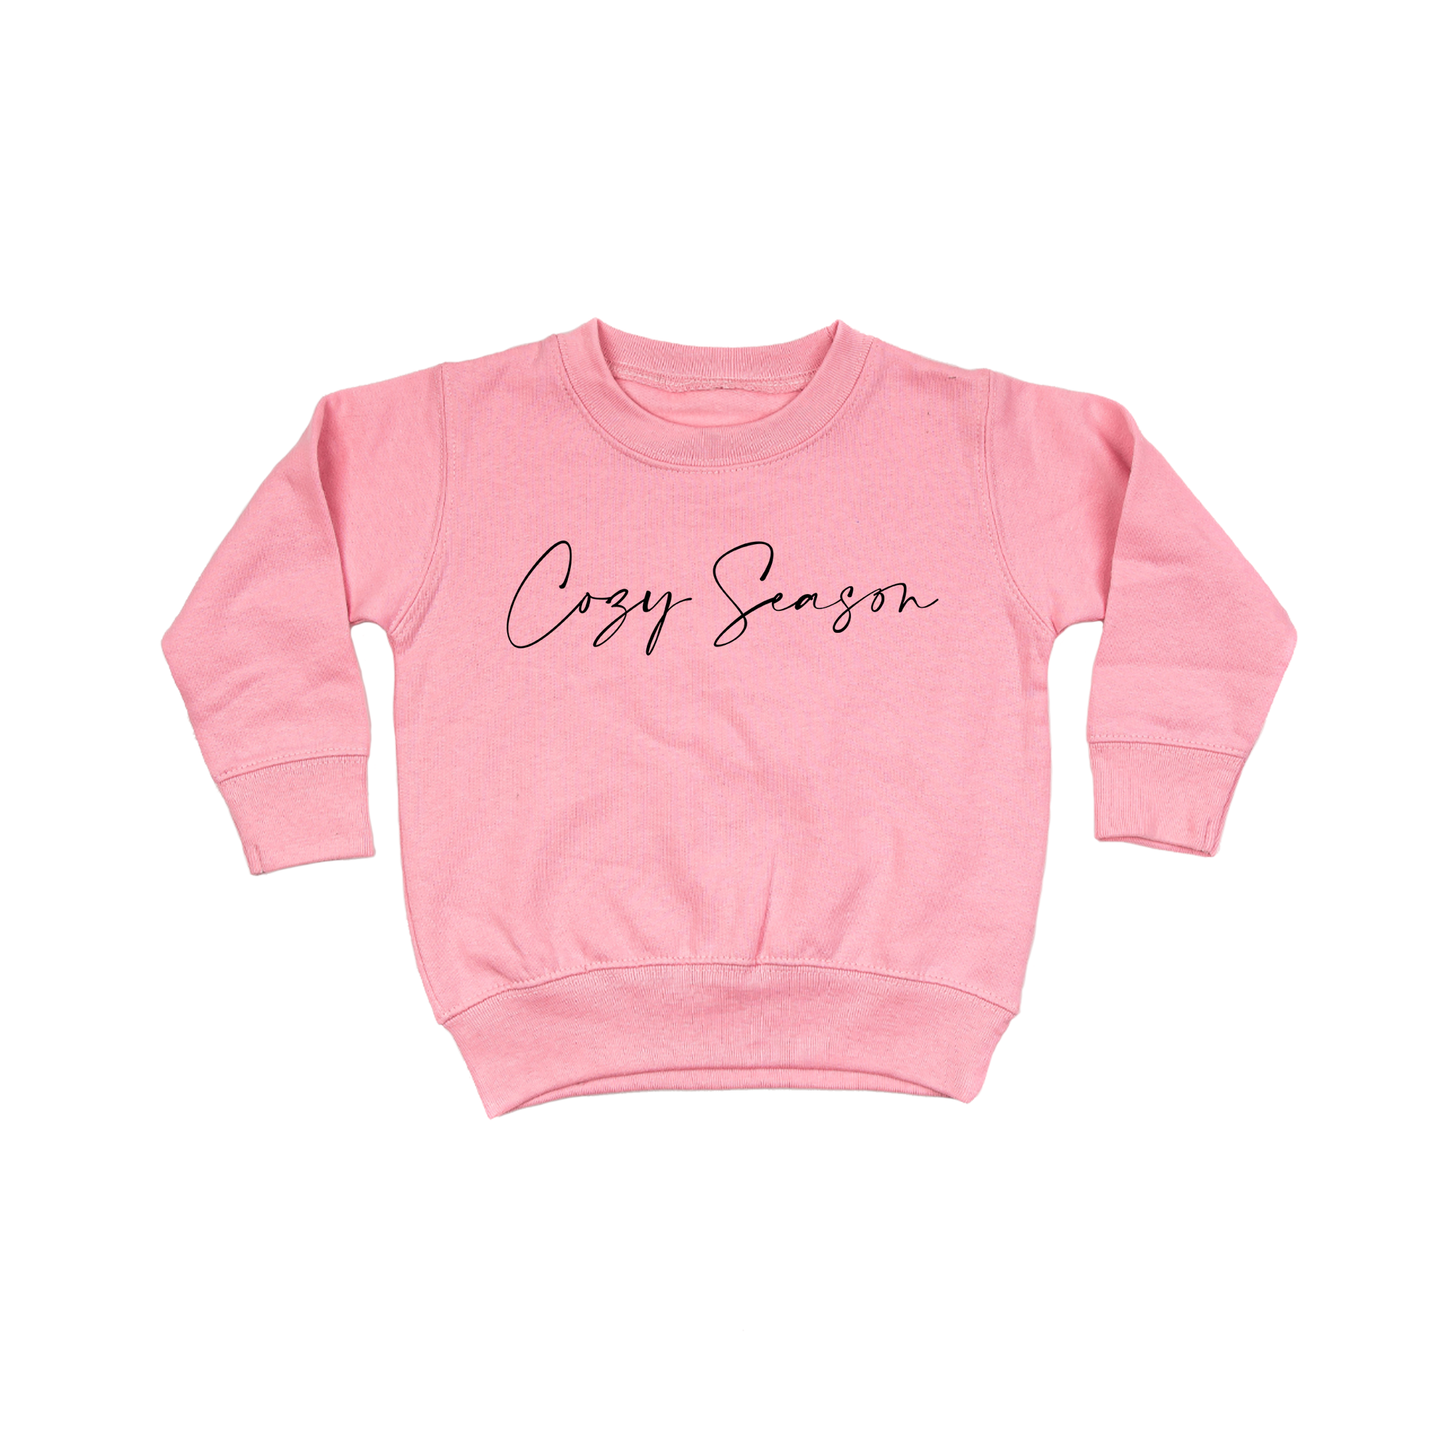 Cozy Season (Black) - Kids Sweatshirt (Pink)